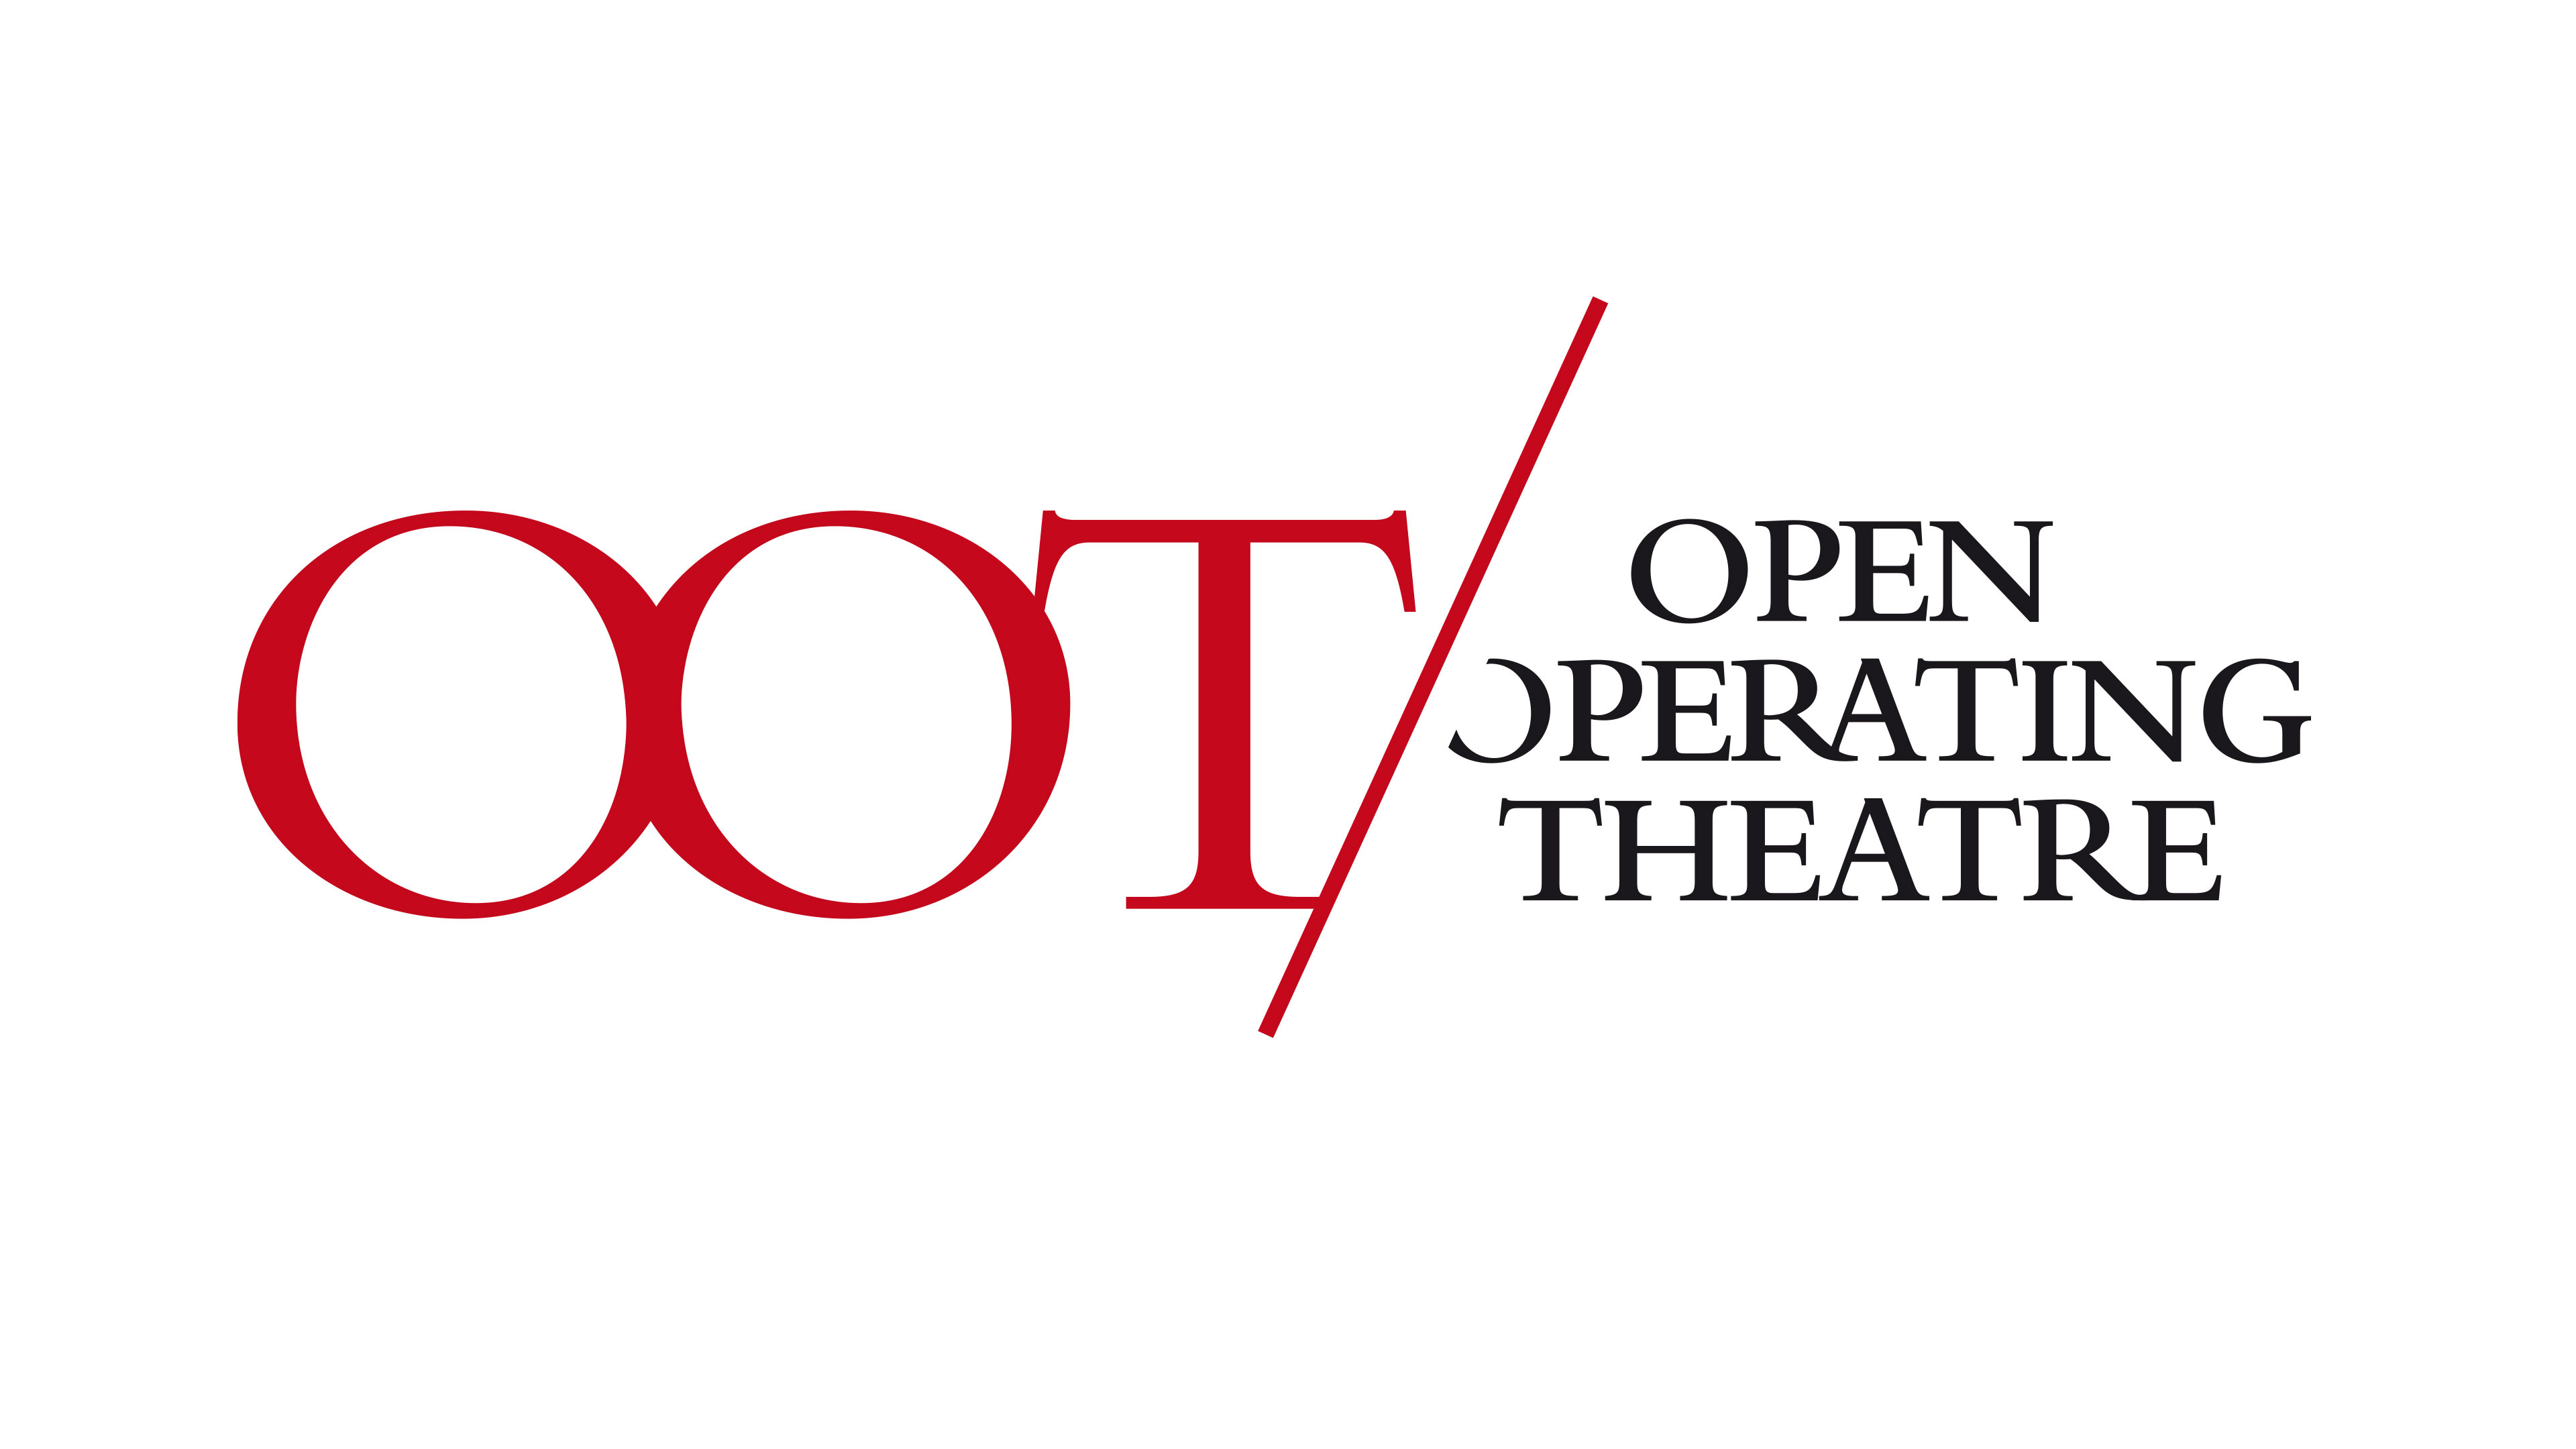 Technical staff operation theatre association